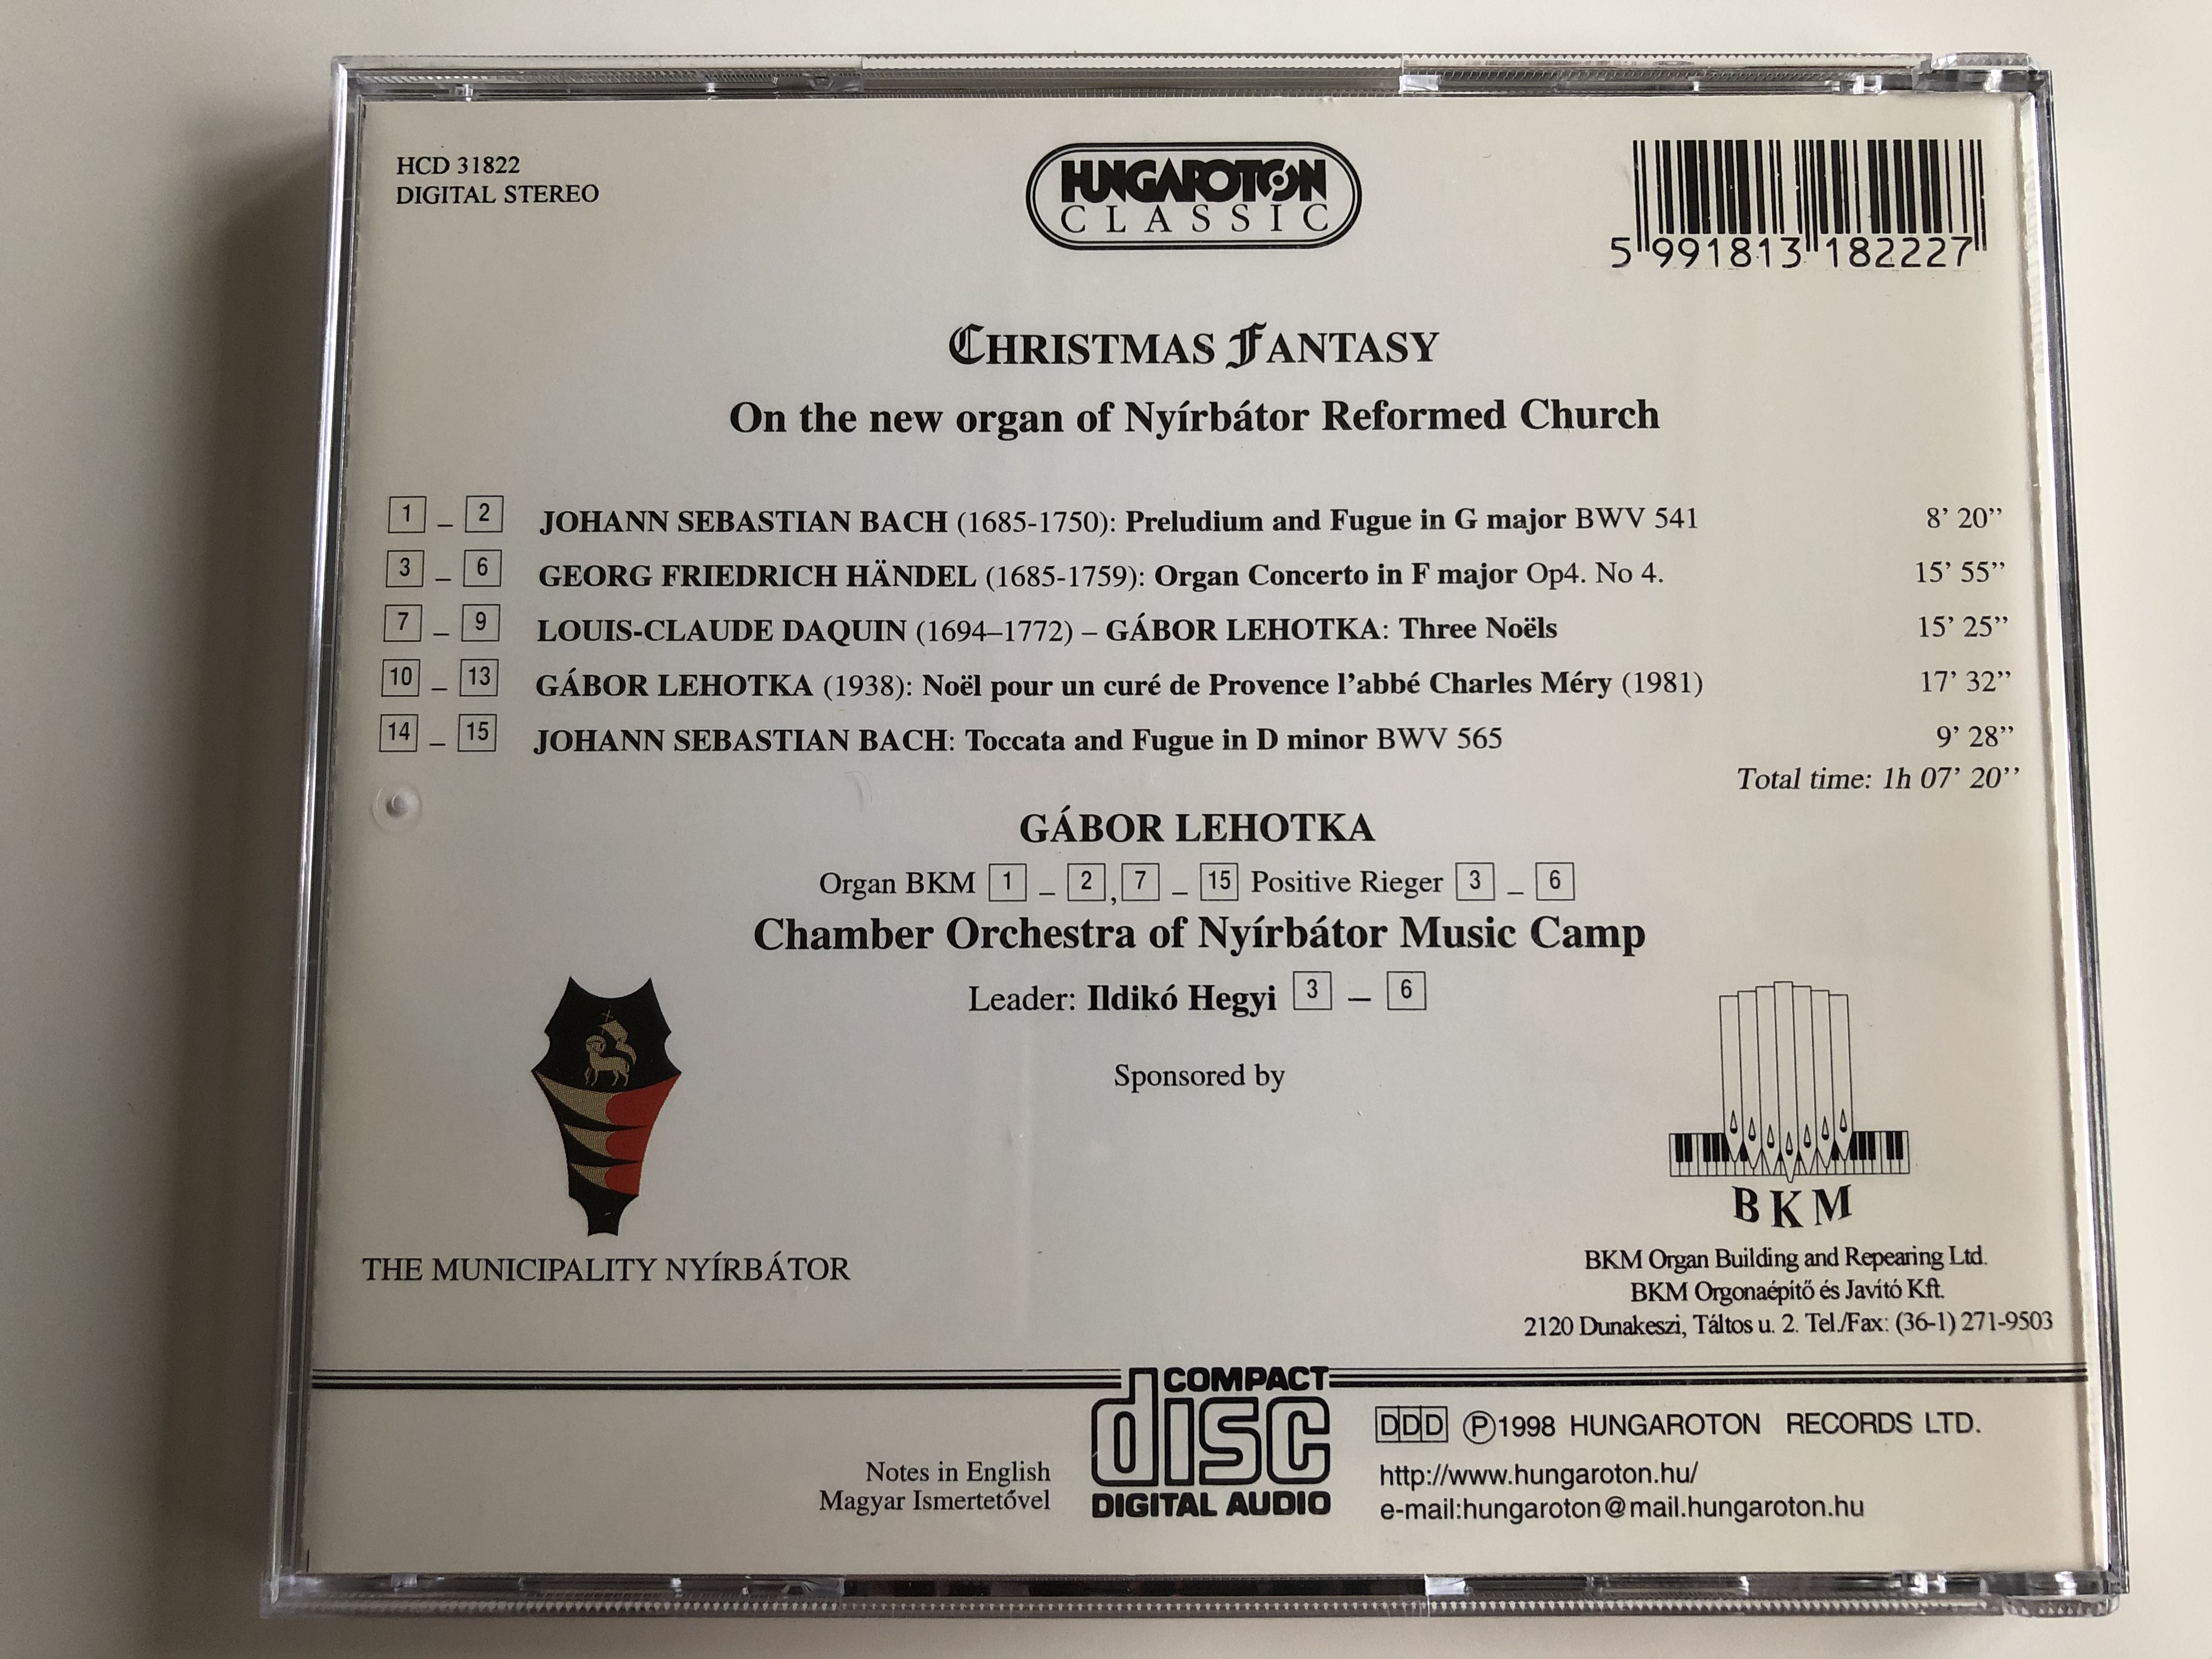 christmas-fantasy-j.-s.-bach-handel-daquin-lehotka-gabor-lehotka-on-the-organ-of-nyirbator-music-camp-chamber-orchestra-of-nyirbator-music-camp-hungaroton-classic-audio-cd-1998-stereo-h-8-.jpg